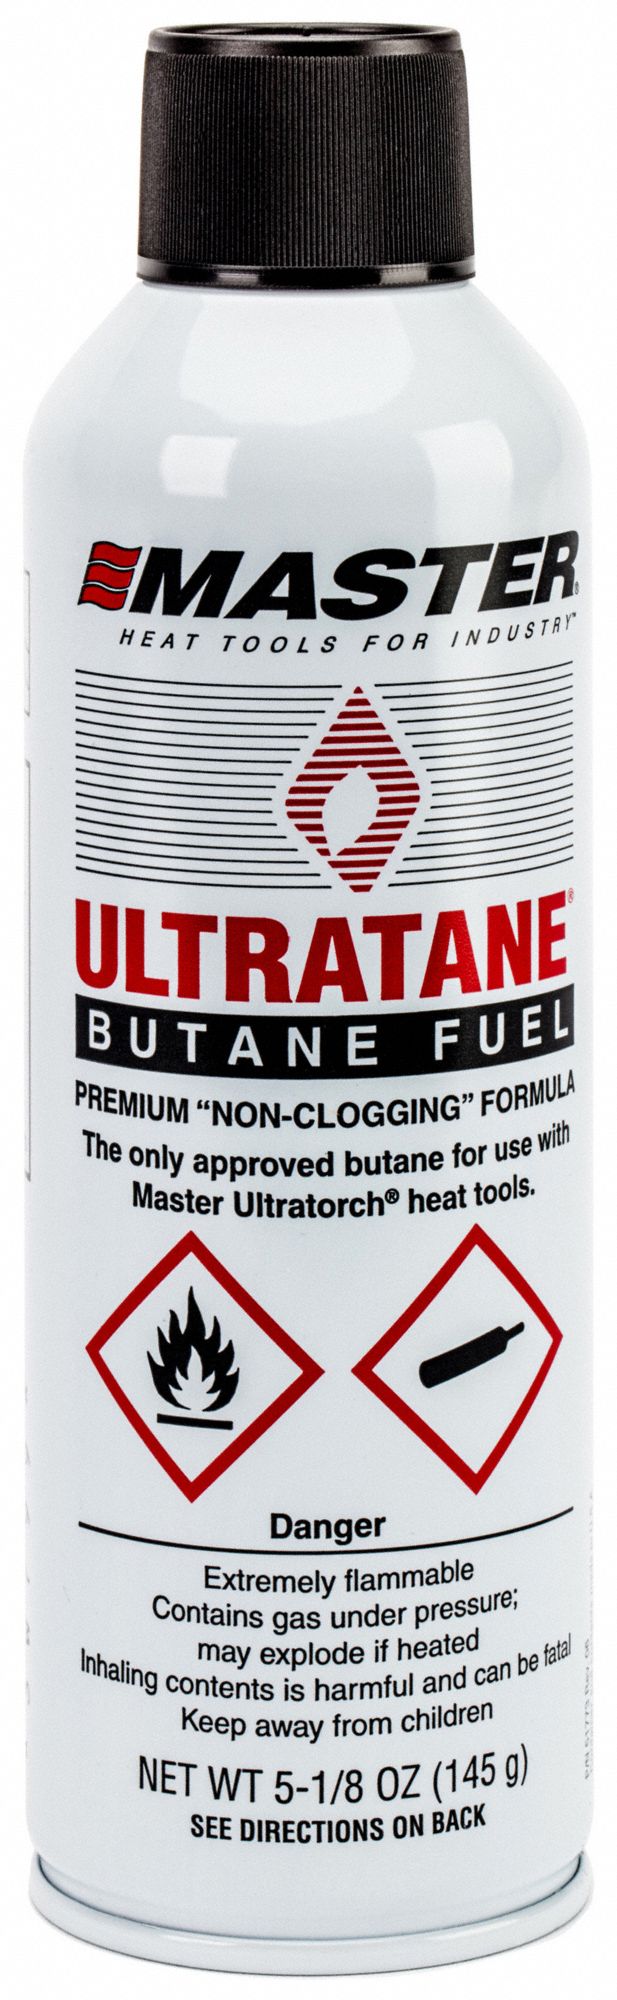 Ultratane Butane Fuel